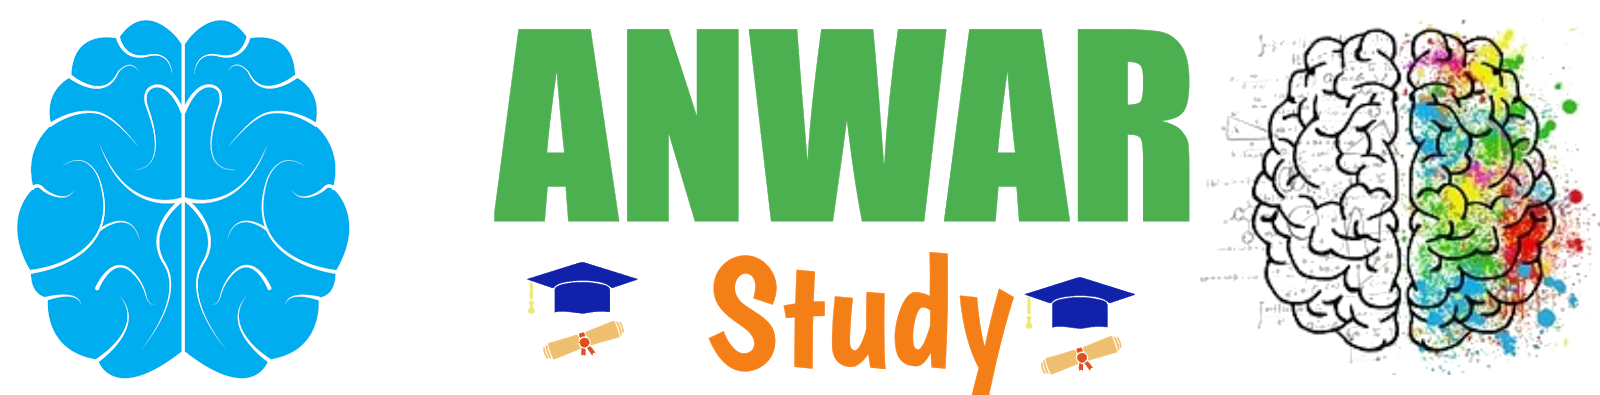 ANWAR Study